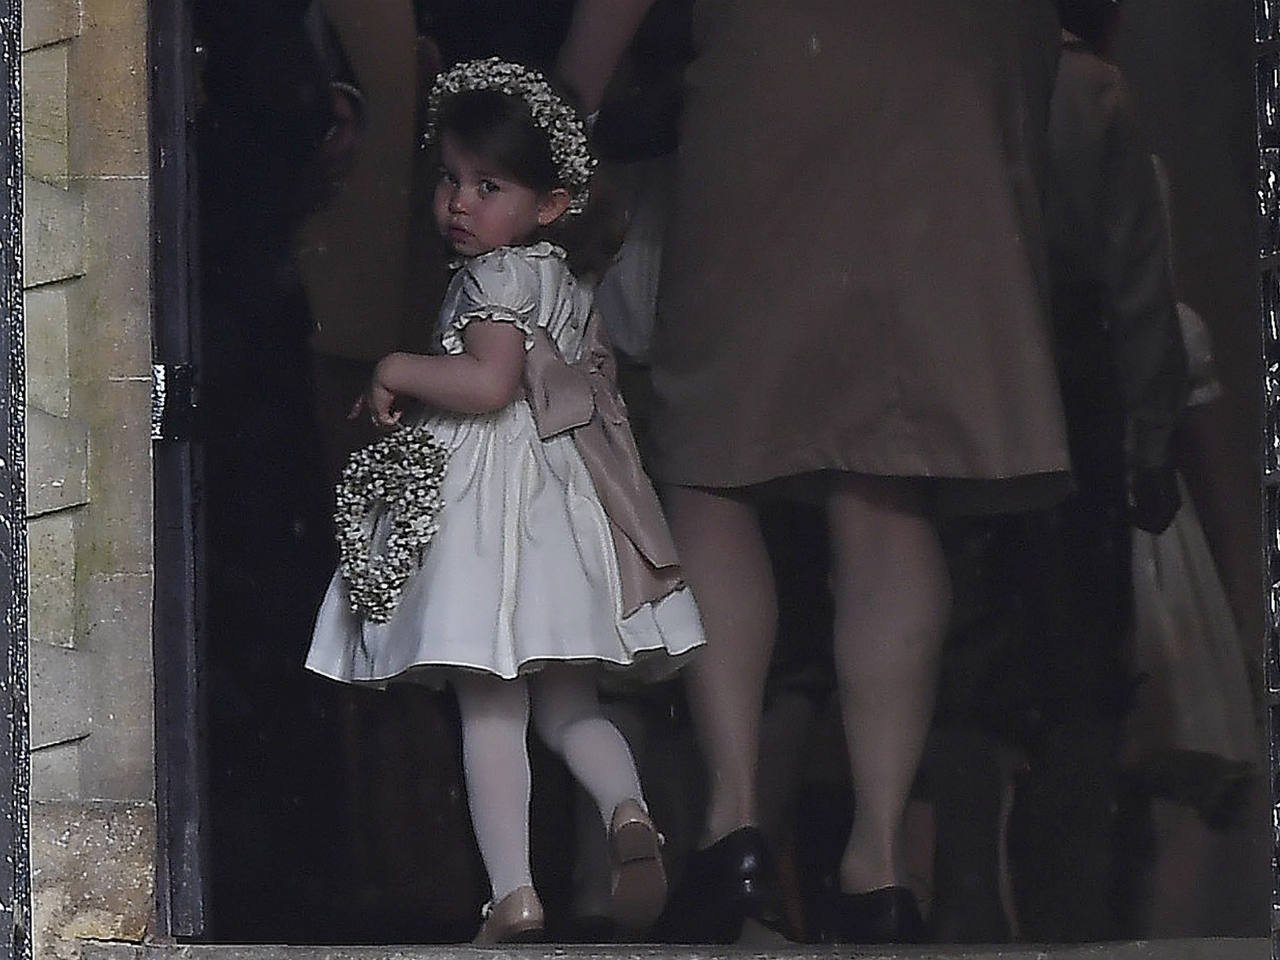 Princess Charlotte in a white dress entering a church